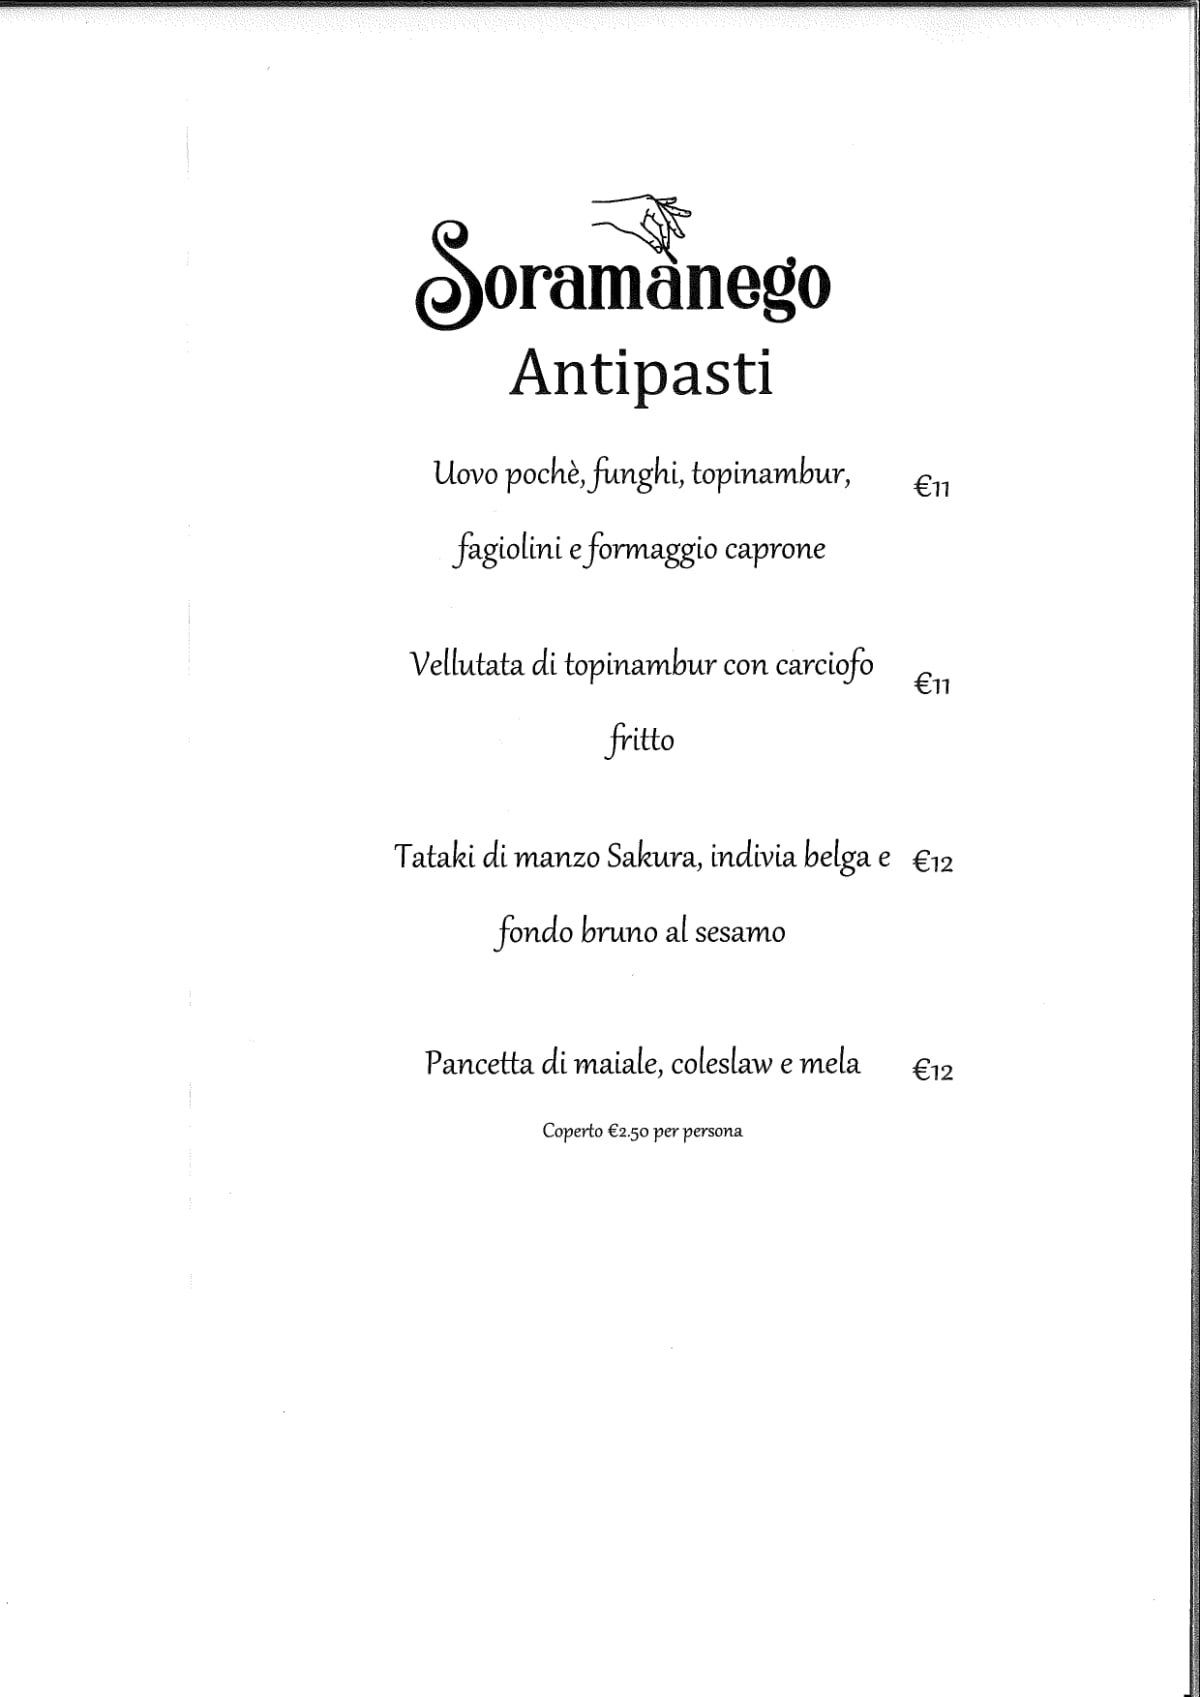 Soramànego  menu